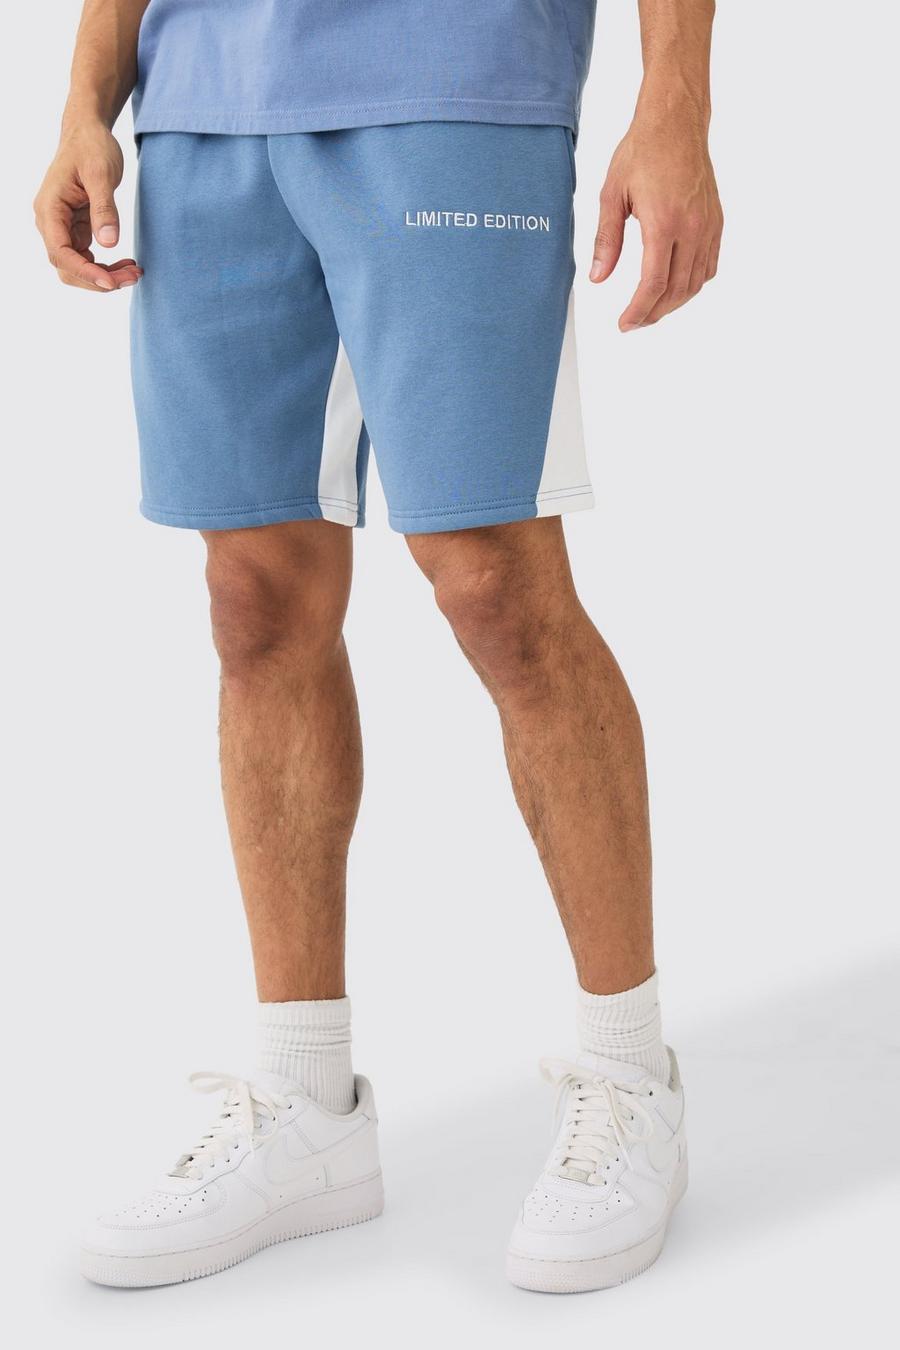 Pantaloncini rilassati con inserti Limited Edition, Dusty blue image number 1